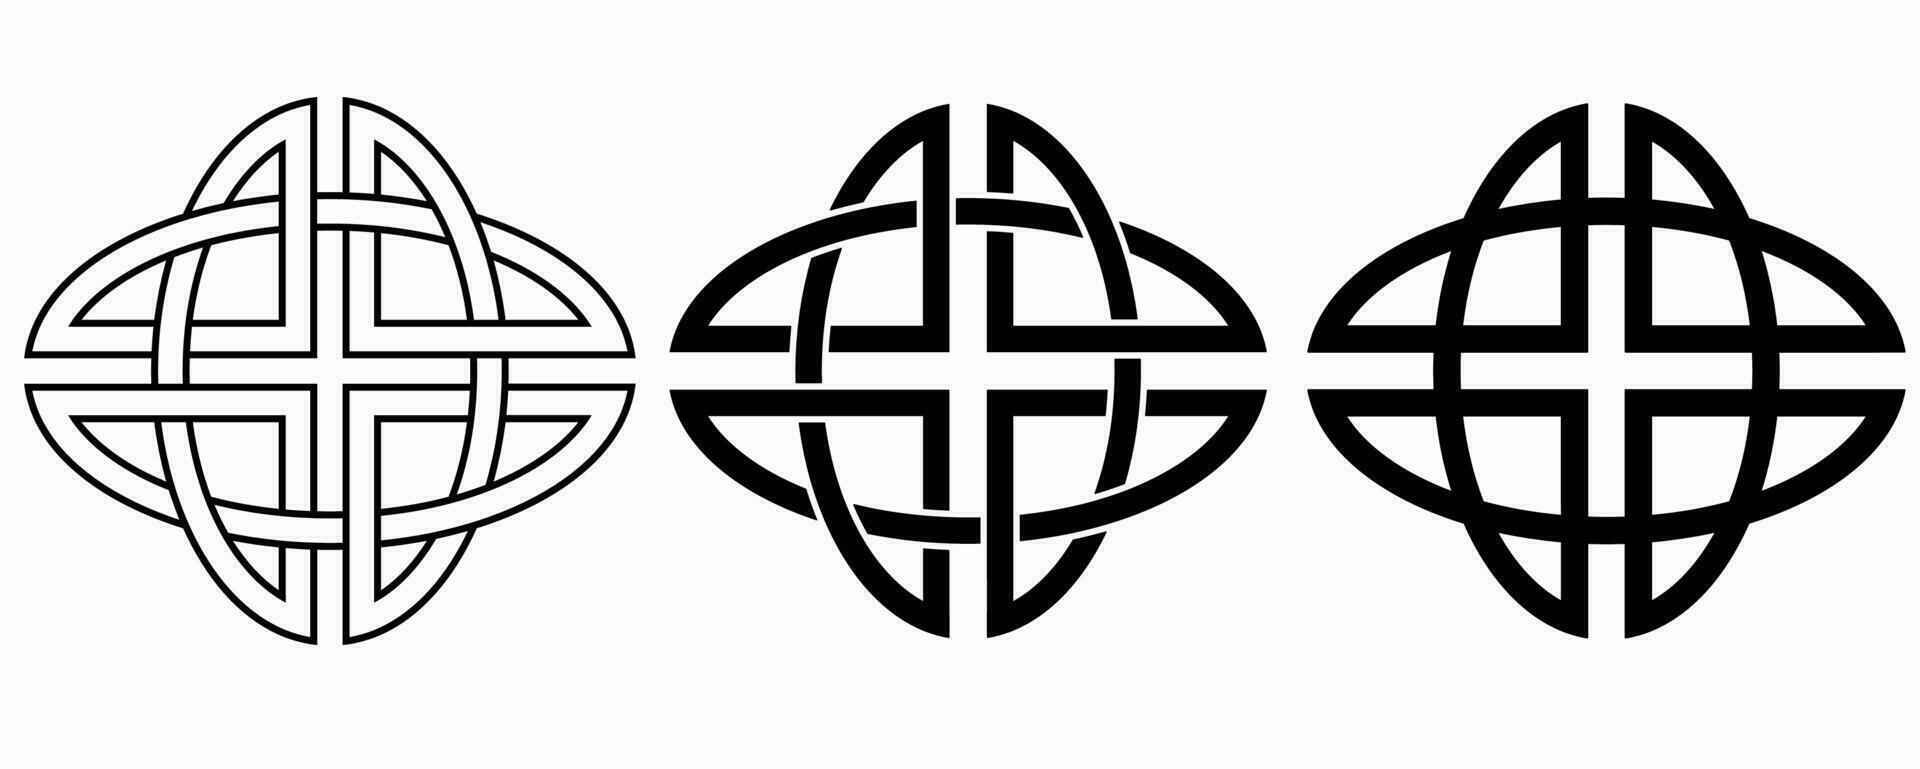 contorno silueta céltico cuaternario nudo icono conjunto aislado en blanco antecedentes vector